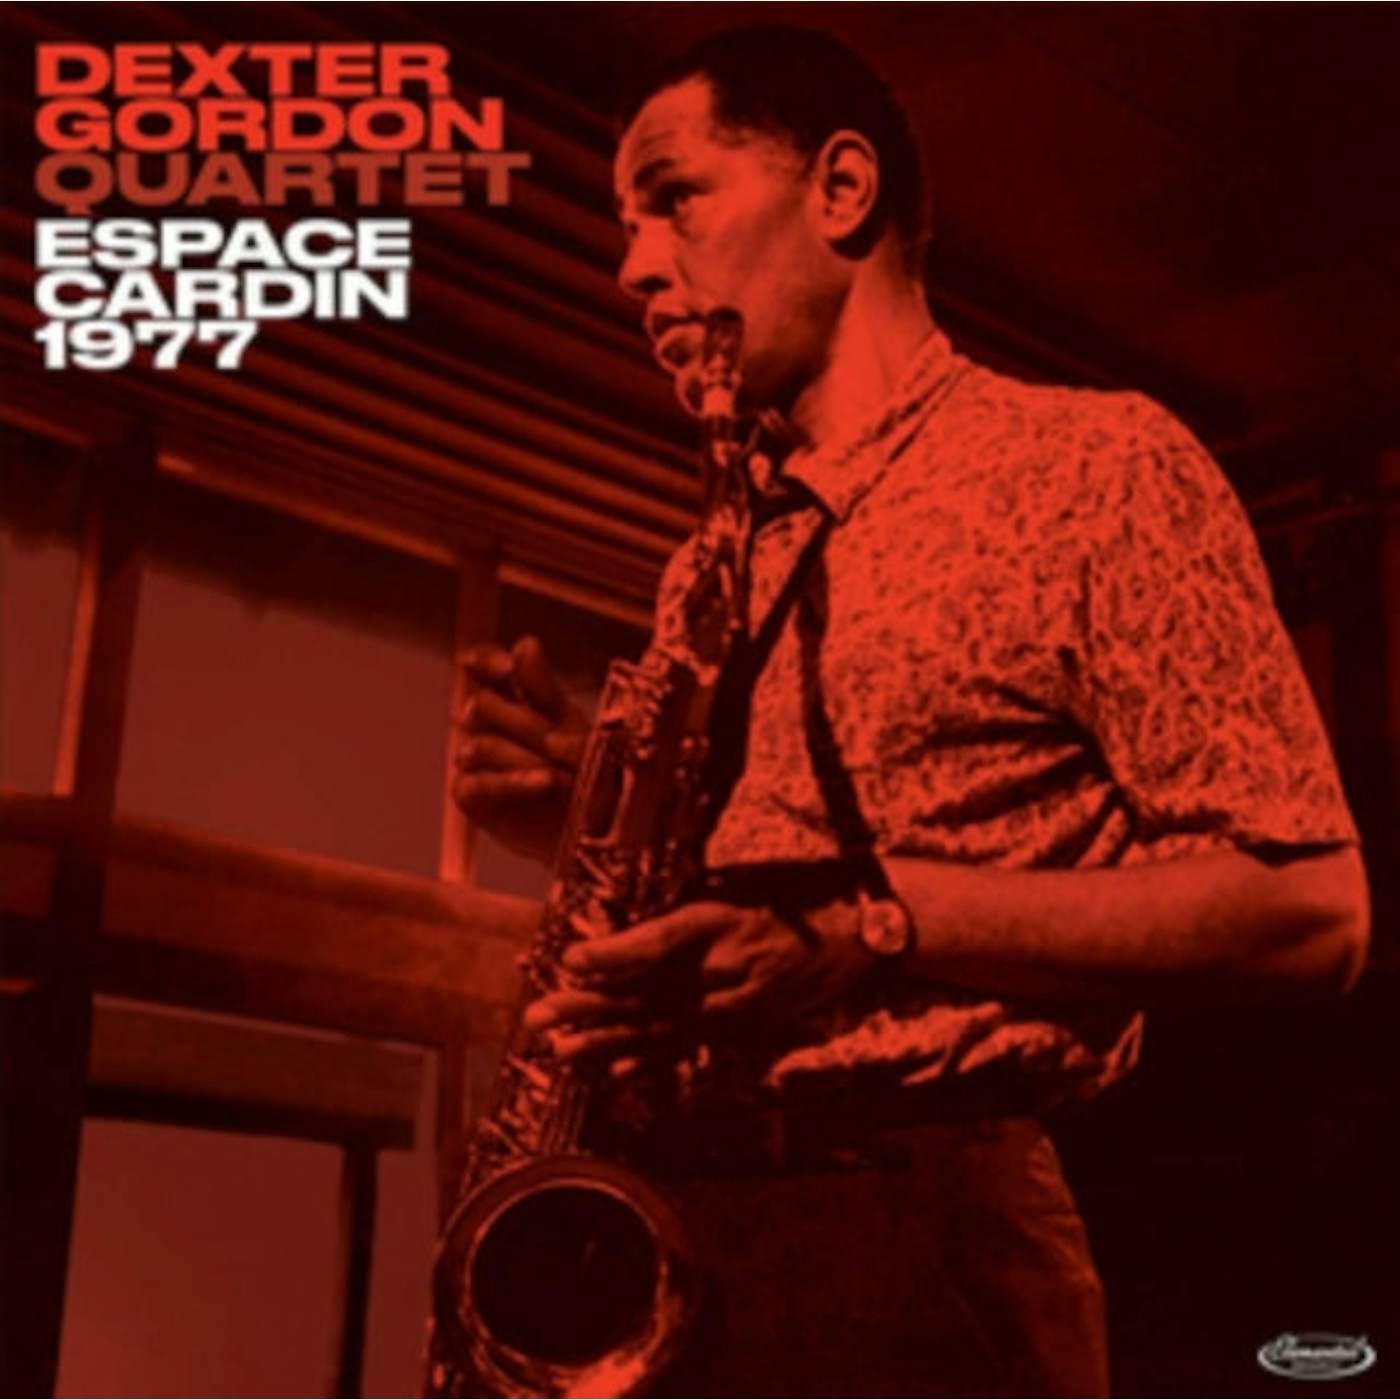 Dexter Gordon Quartet CD - Espace Cardin 19 77